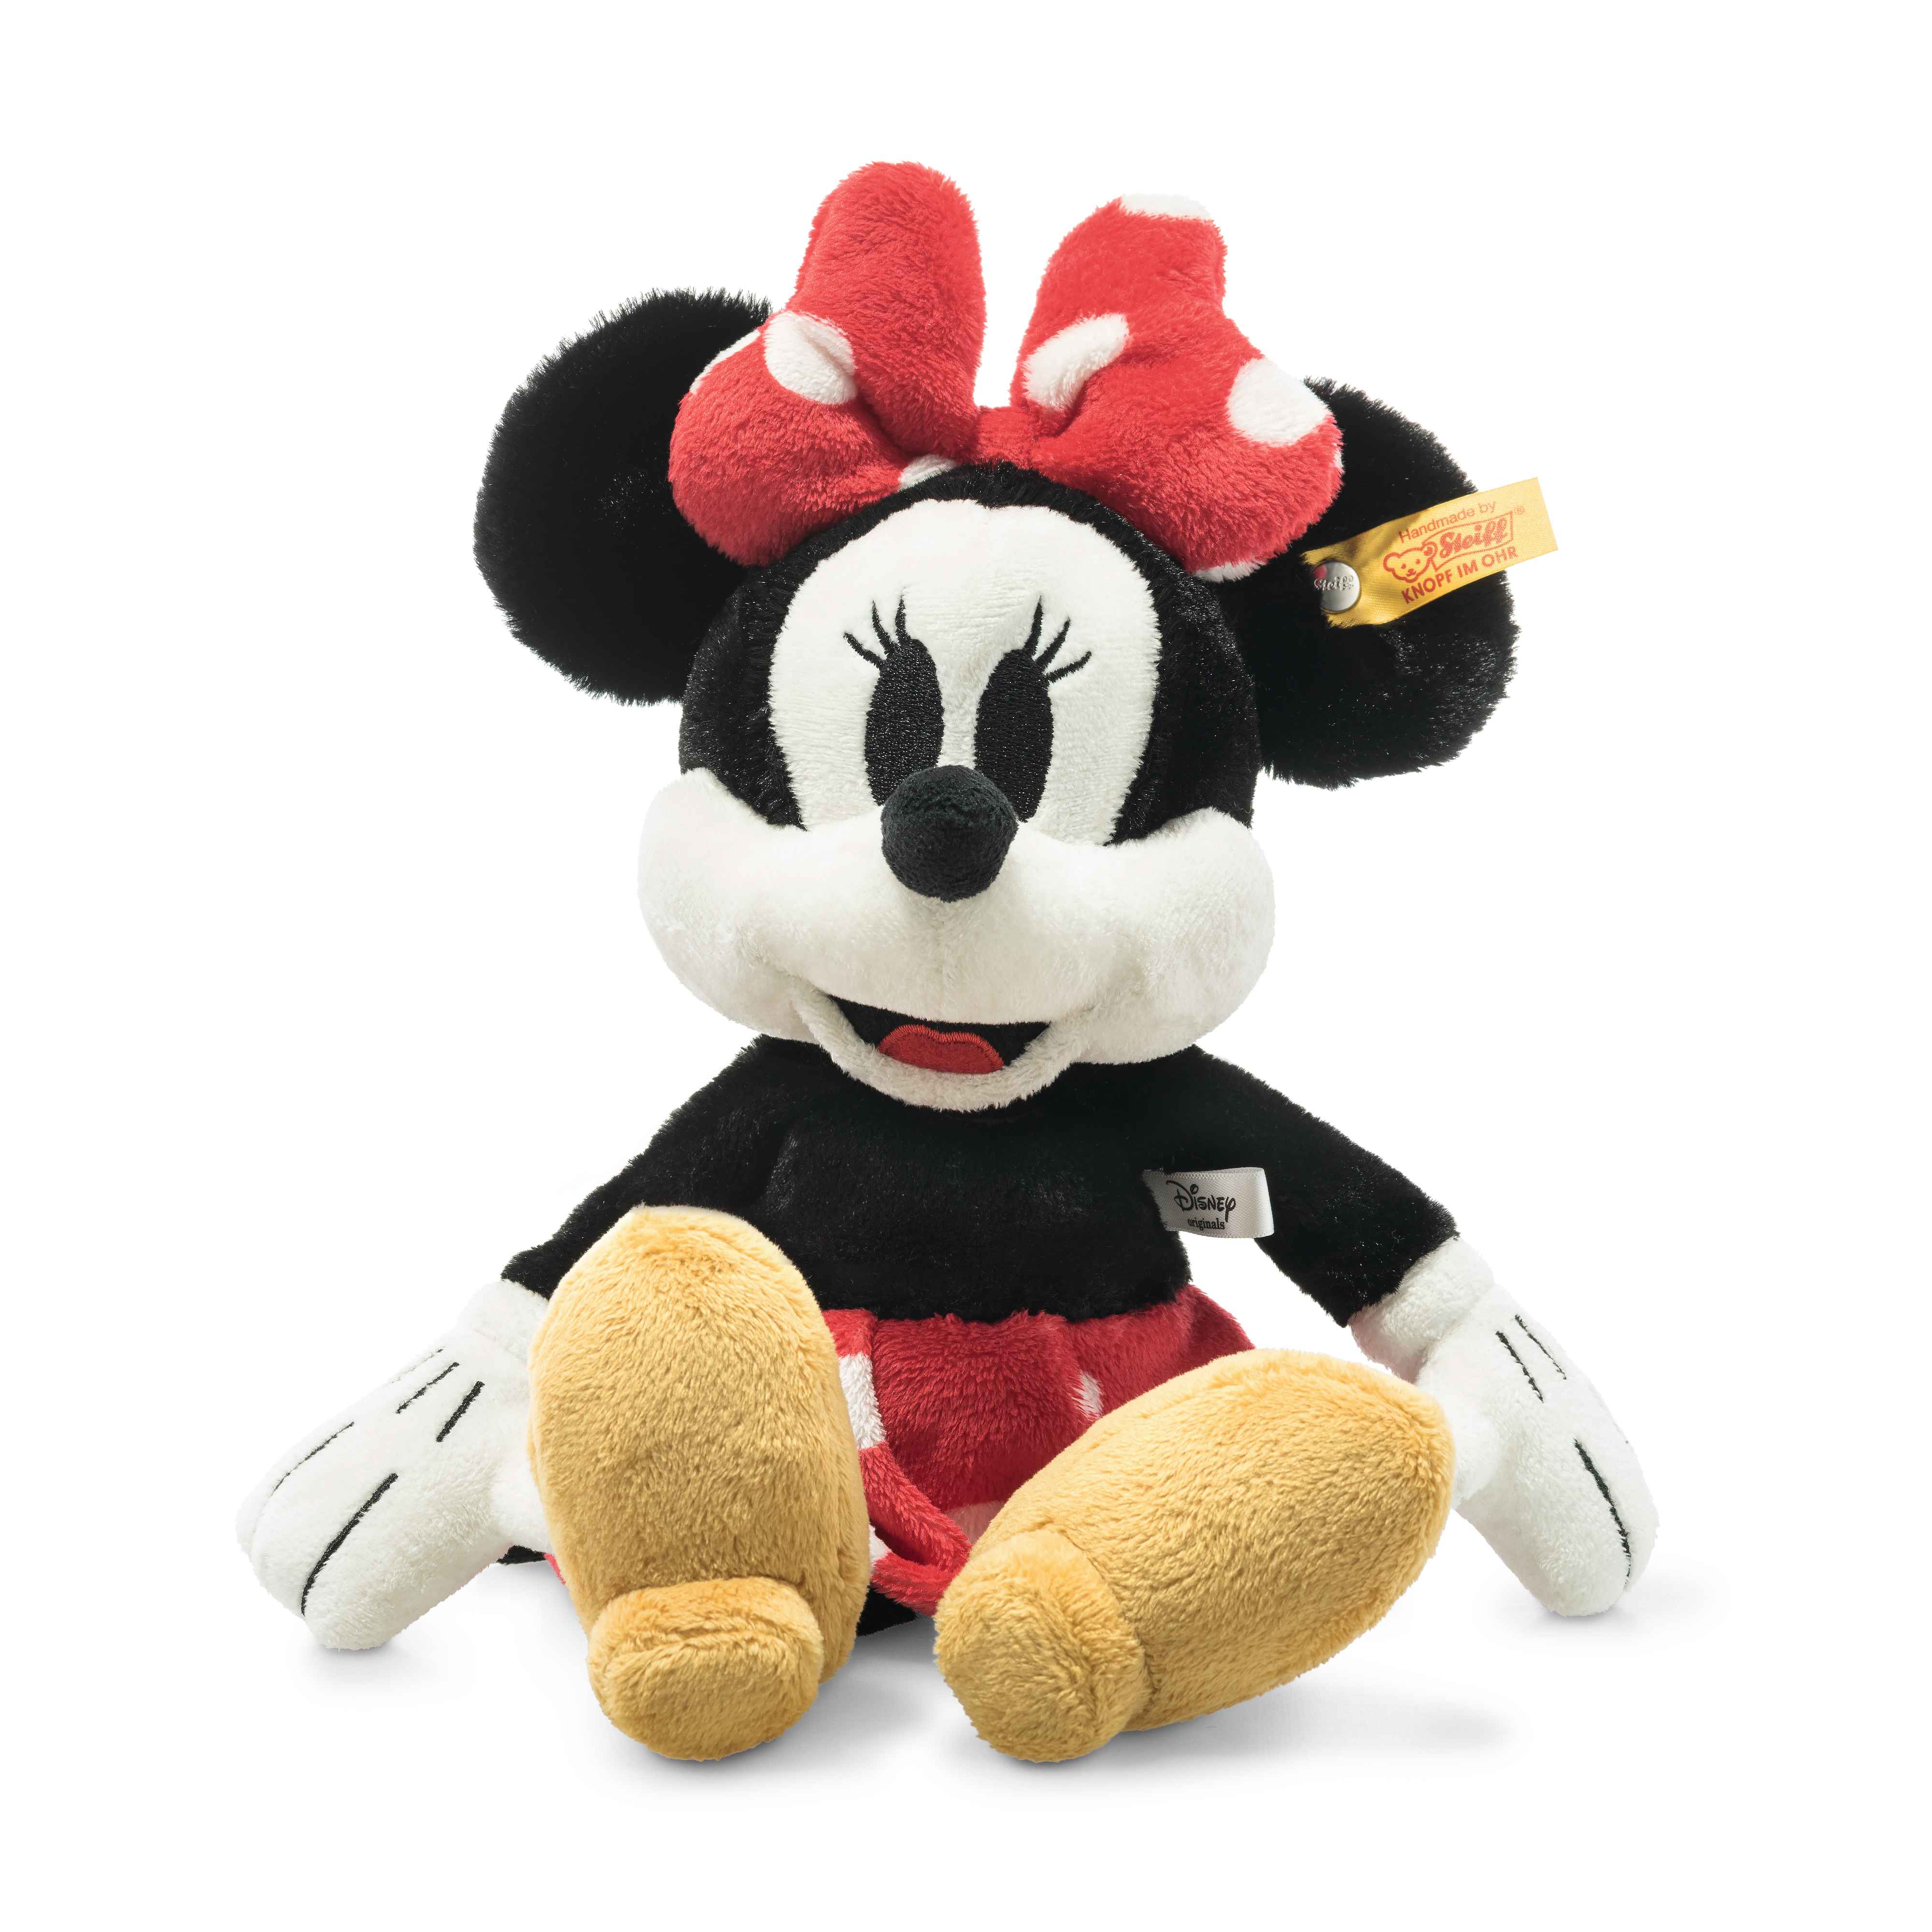 Disney x Steiff Mickey & Minnie Mouse Handmade Collectible Plush